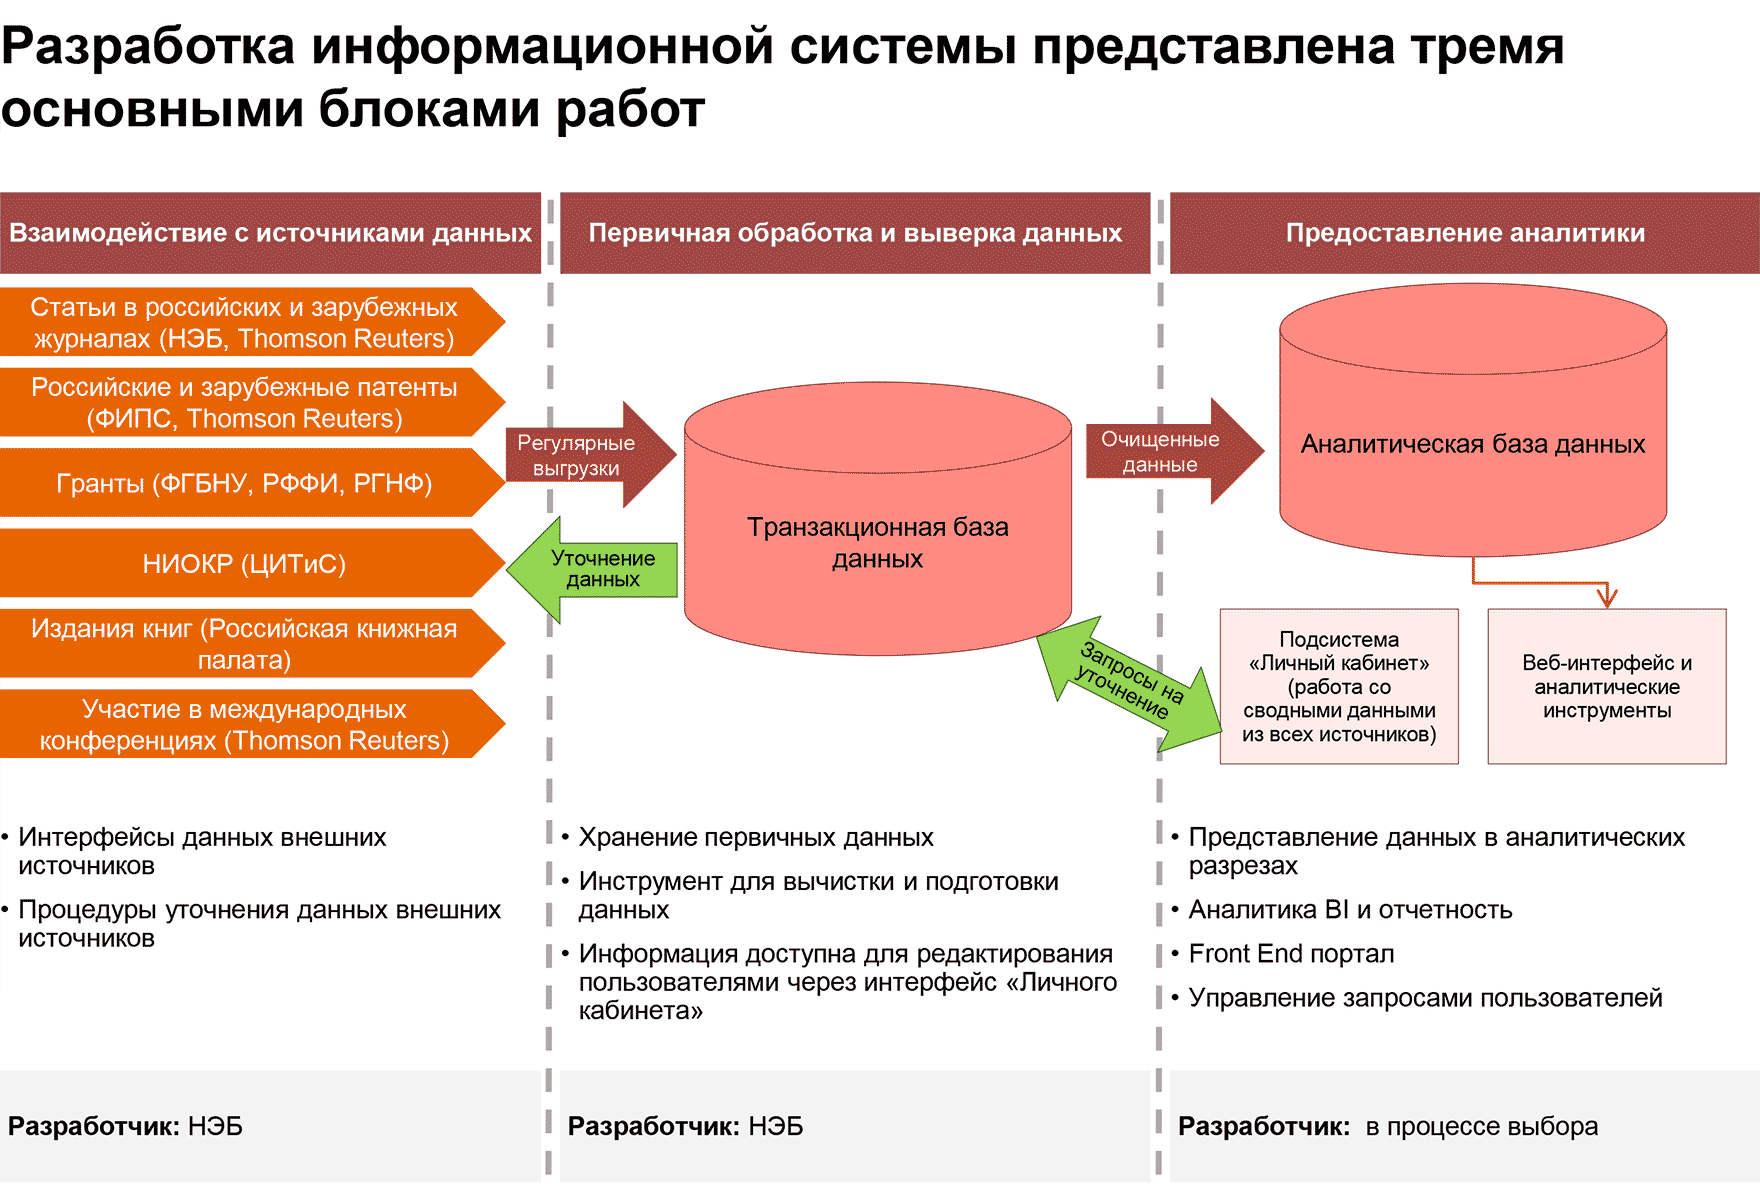 Обзор ИС «Карта российской науки»: от концепции до реализации